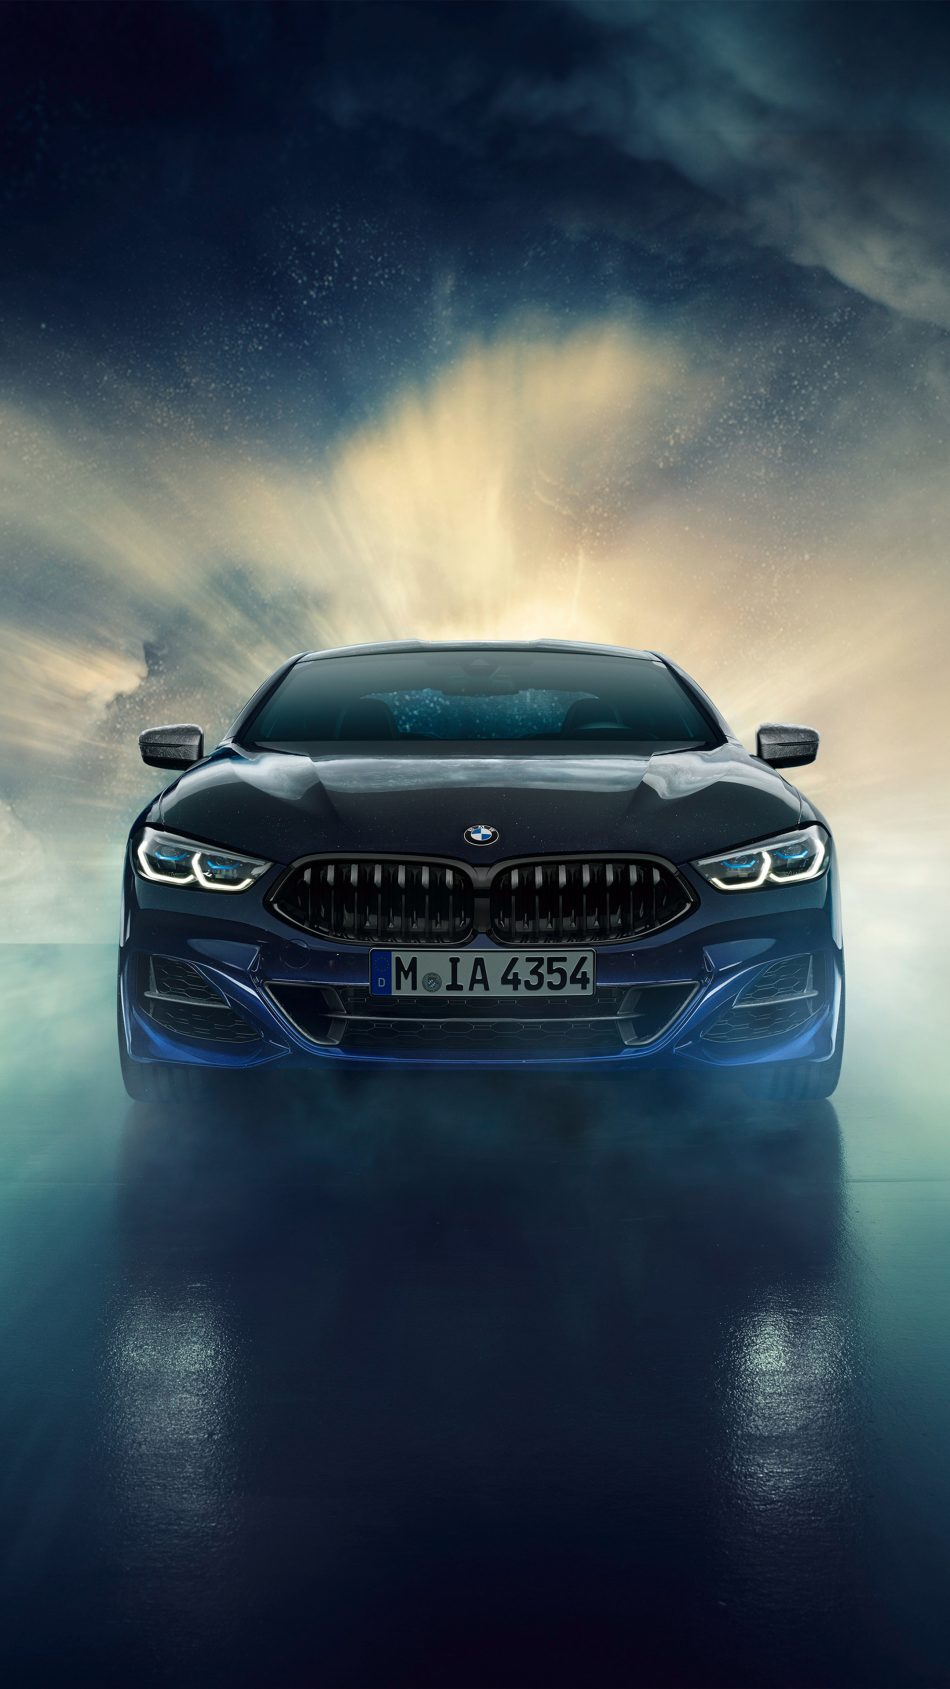 BMW Individual M850i Xdrive Night Sky 4K Ultra HD Mobile Wallpaper